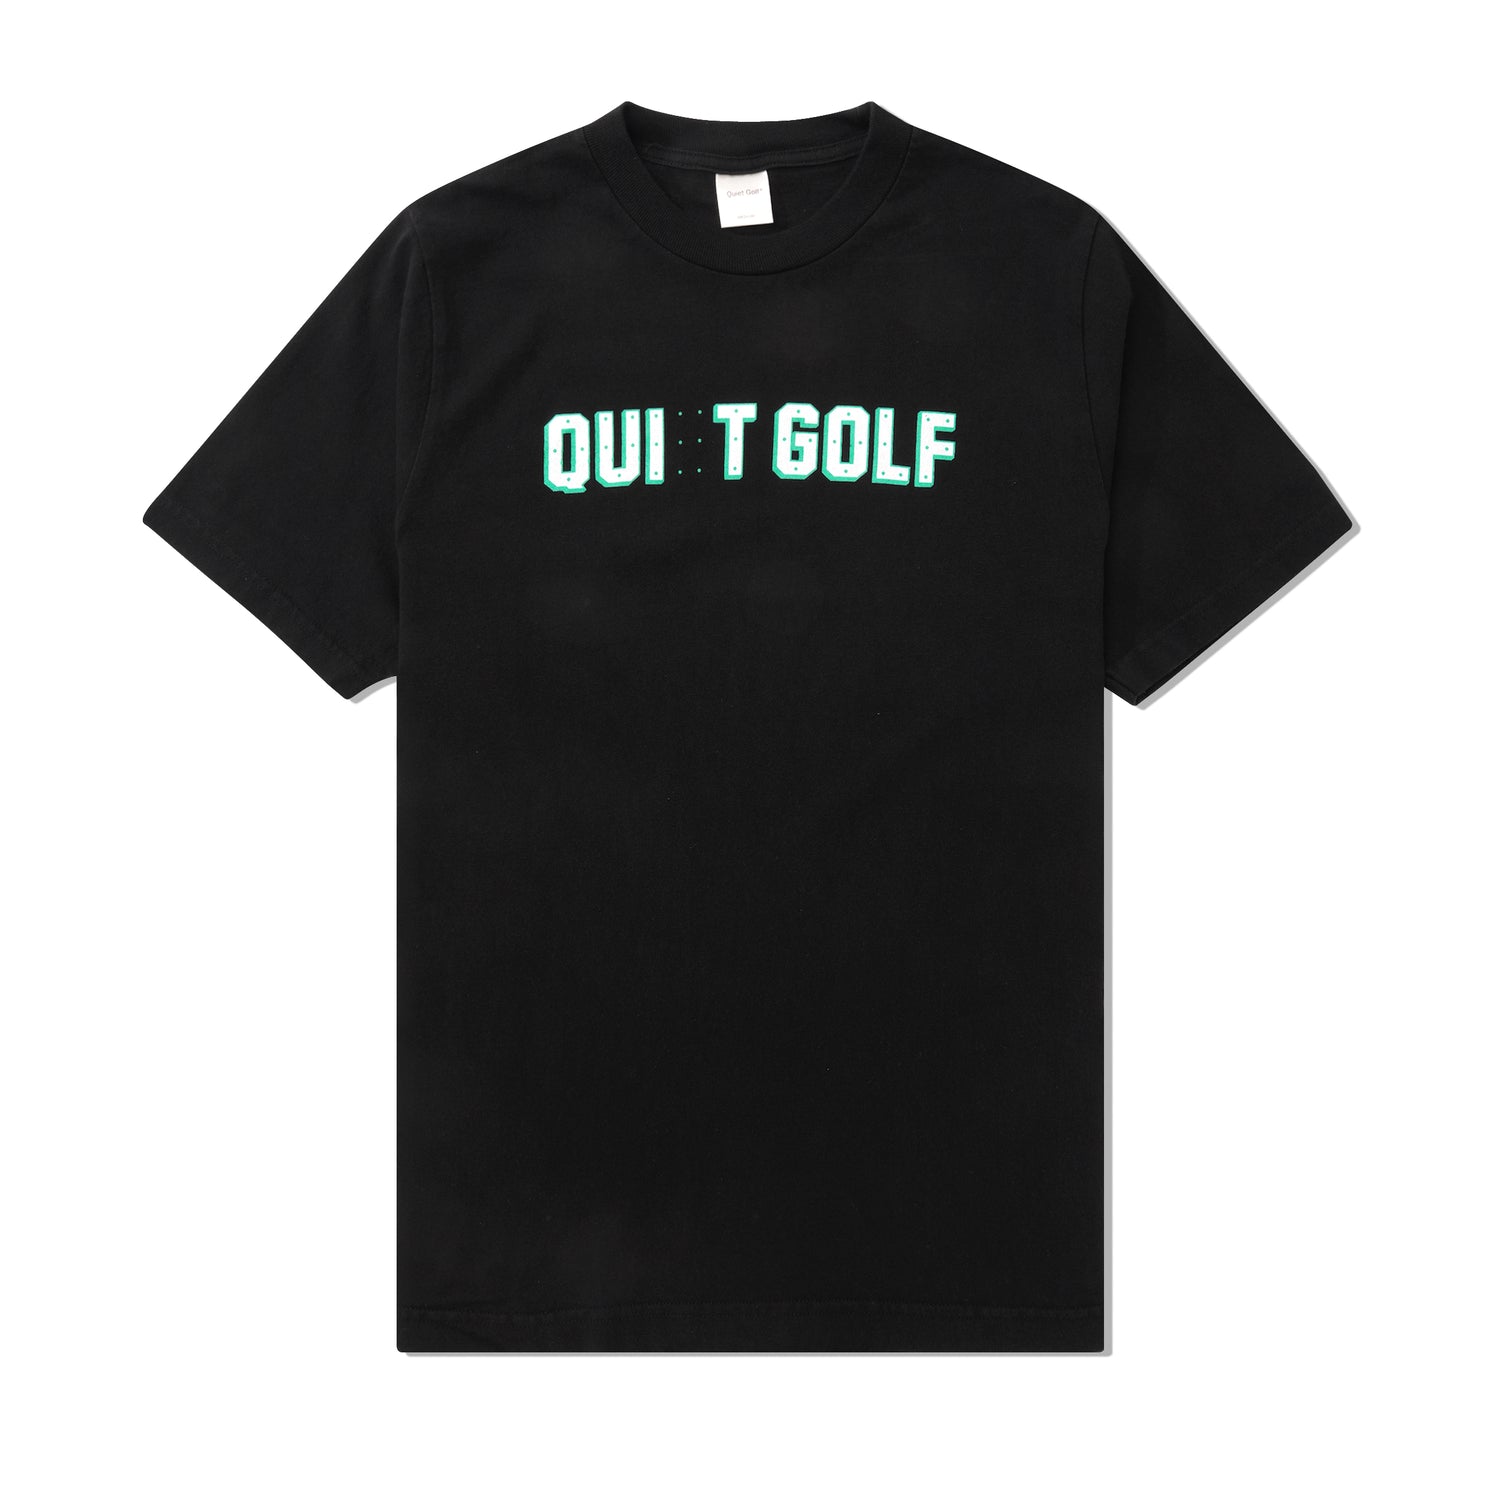 Quit Golf Tee, Black